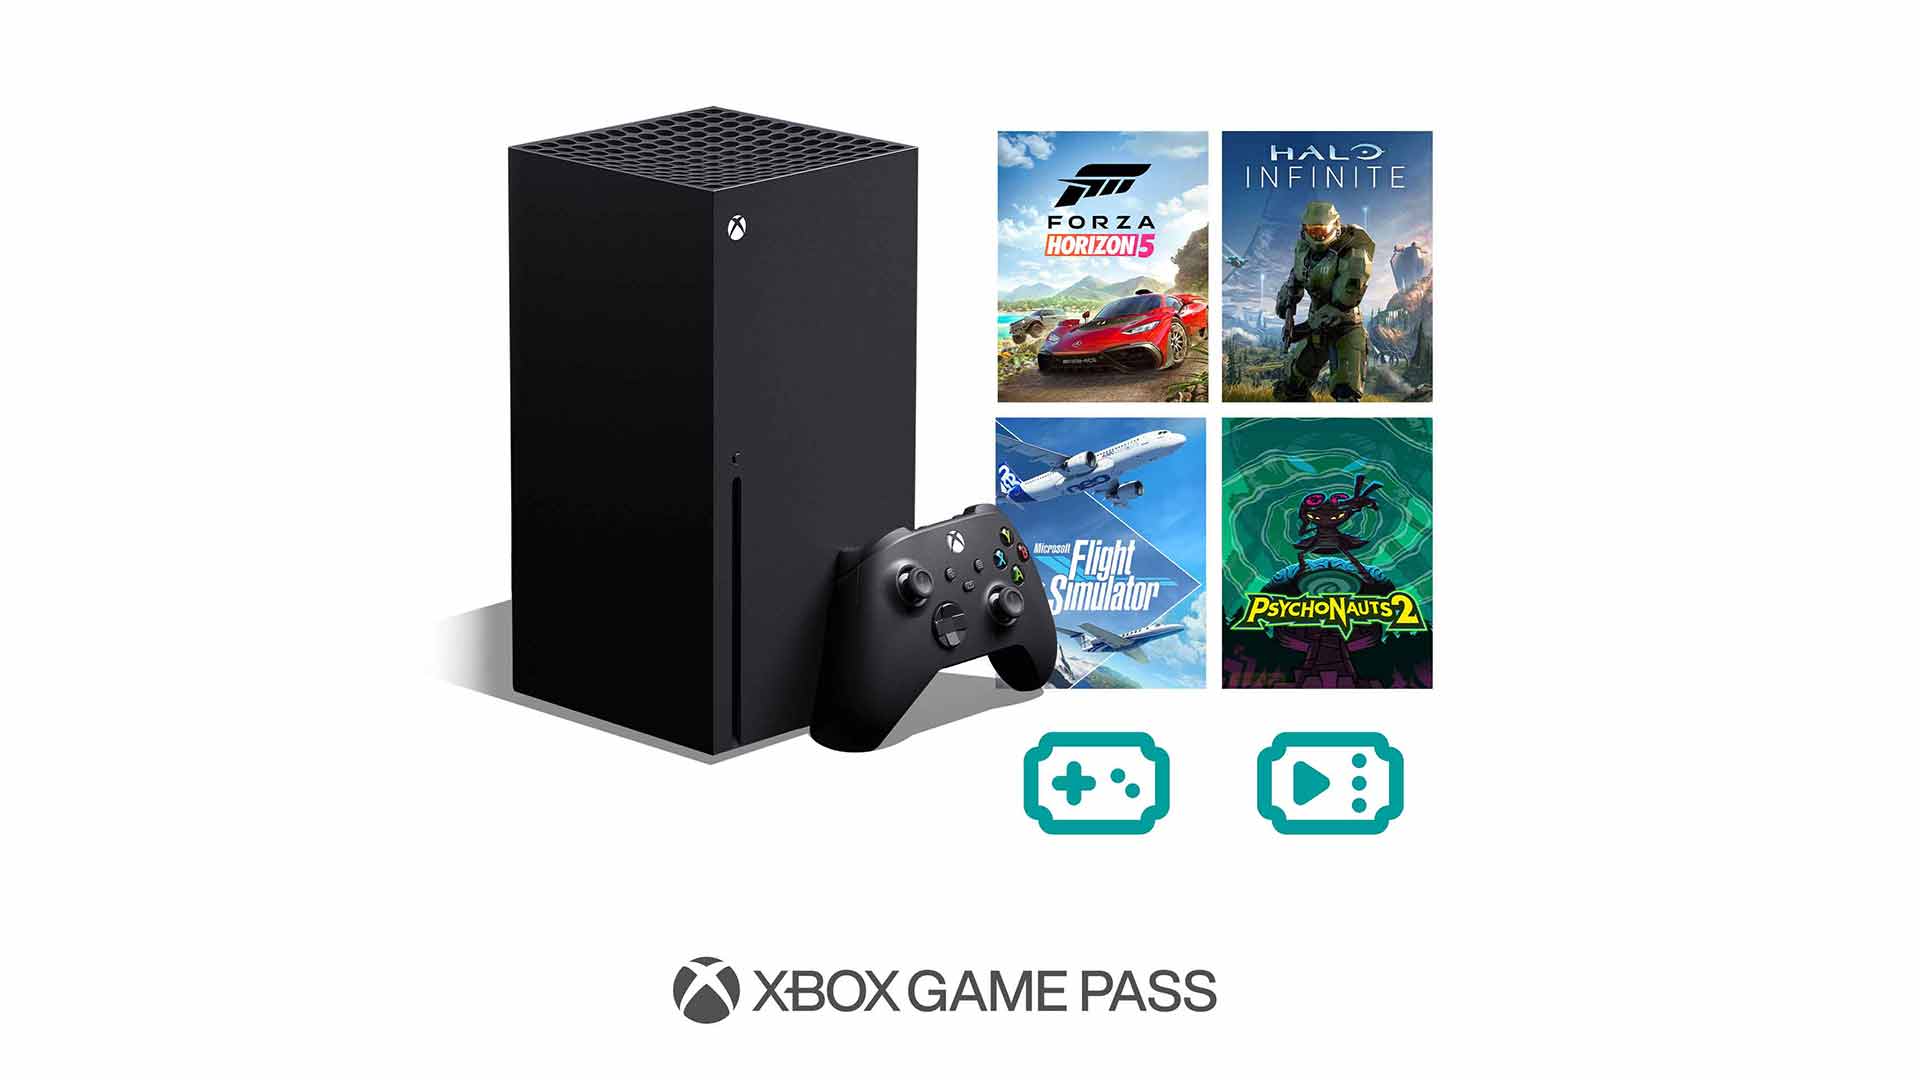 Xbox One S Bundle